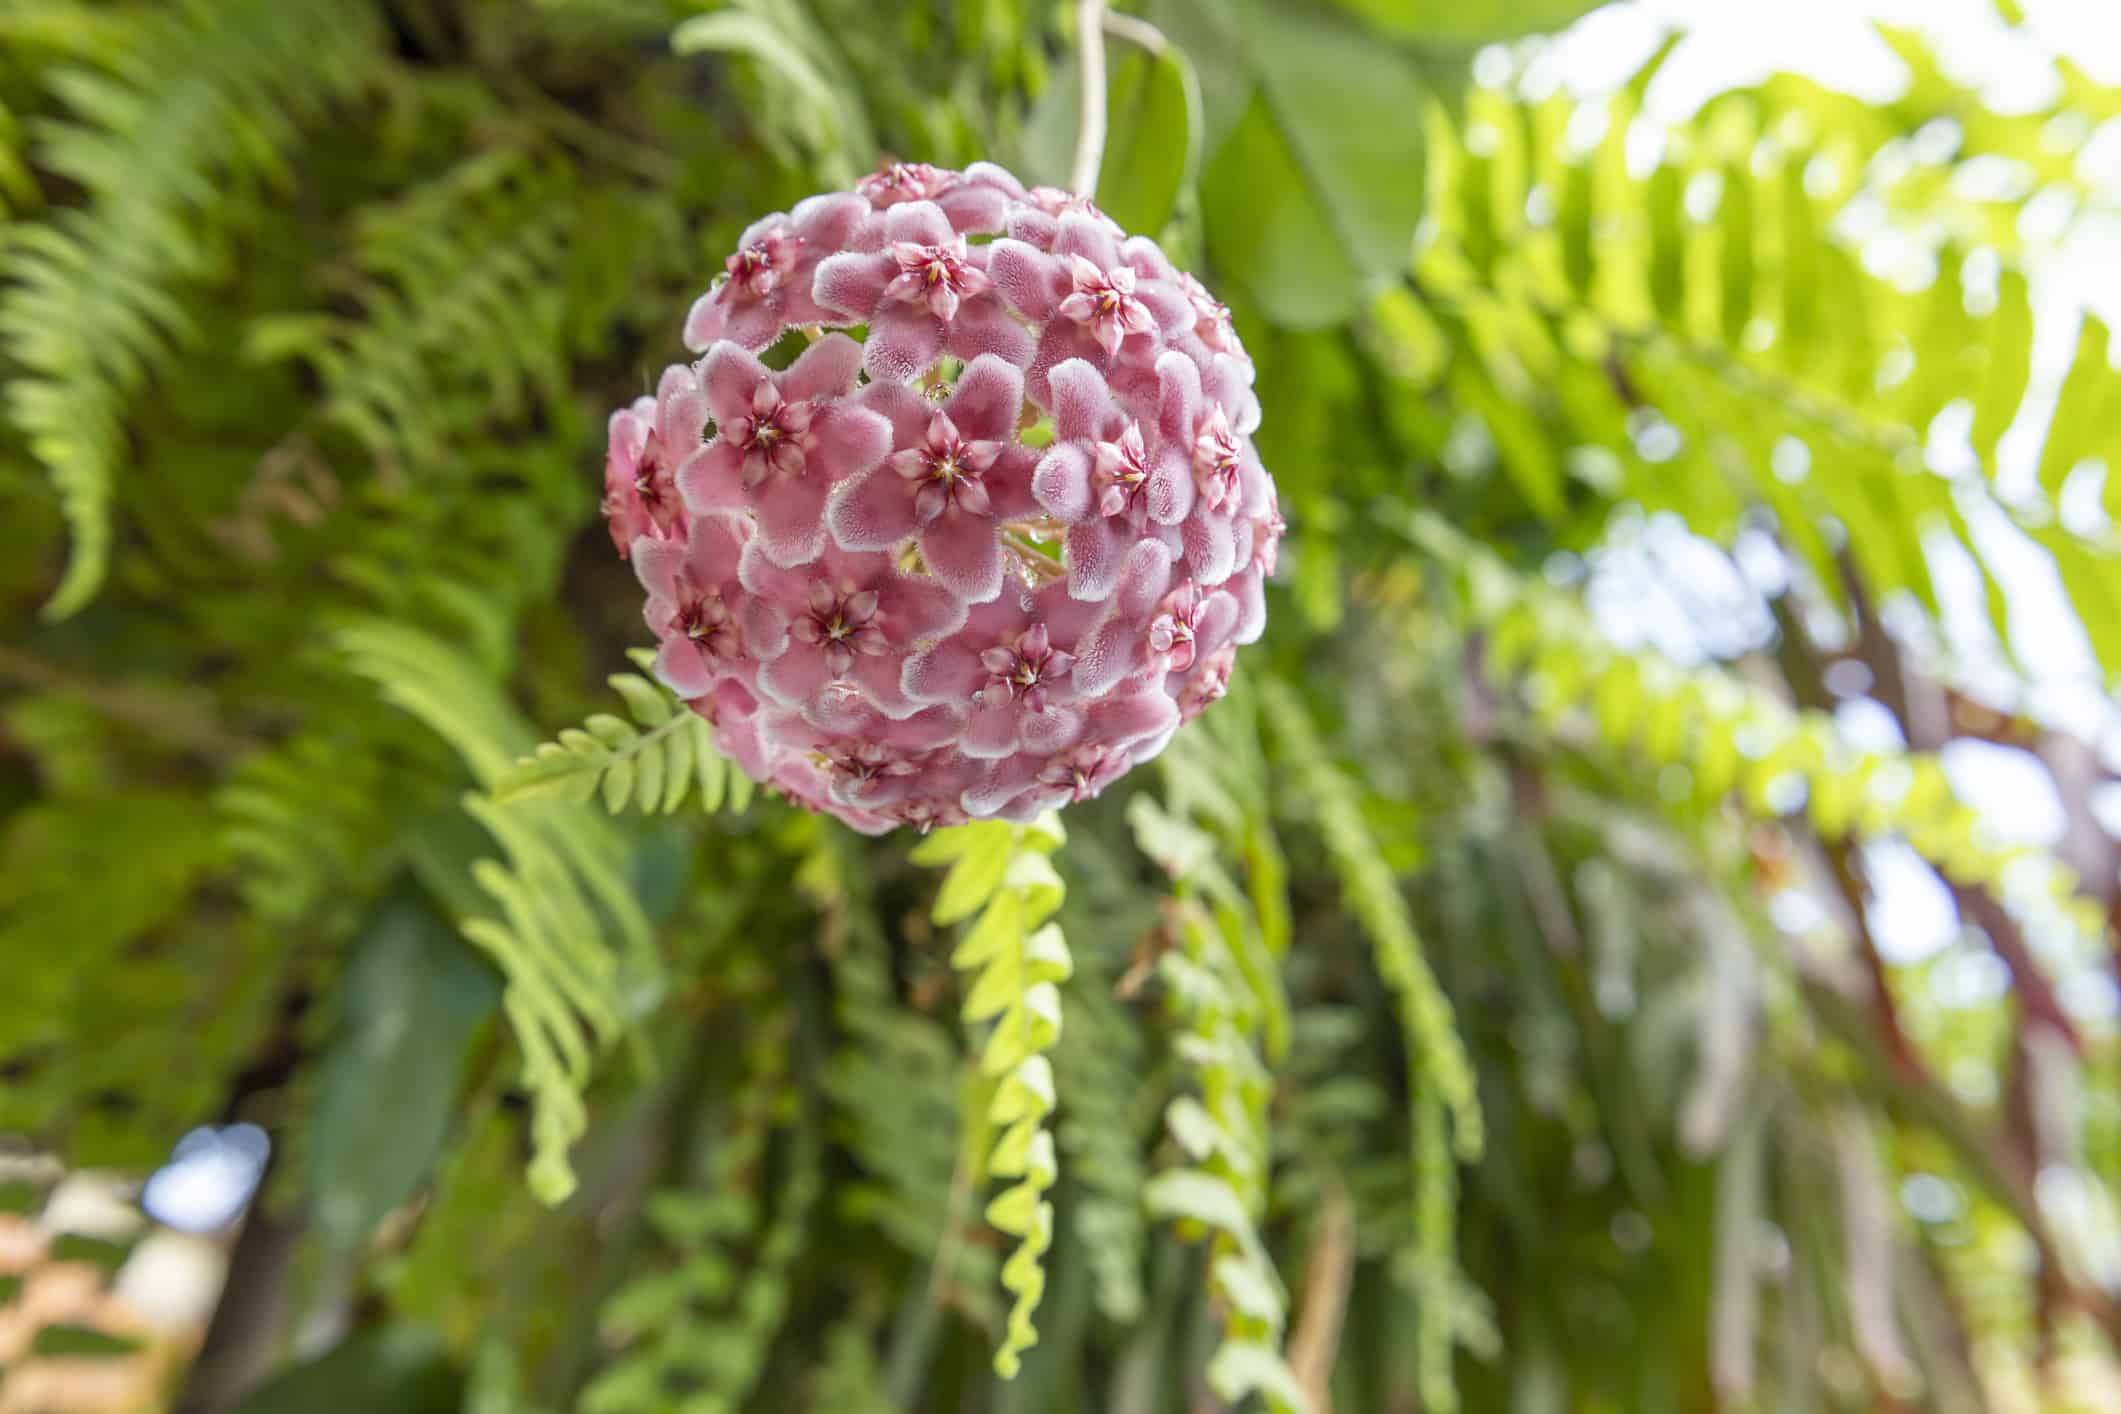 Hoya carnosa flowers. Porcelain flower or wax plant. pink blooming flowers ball